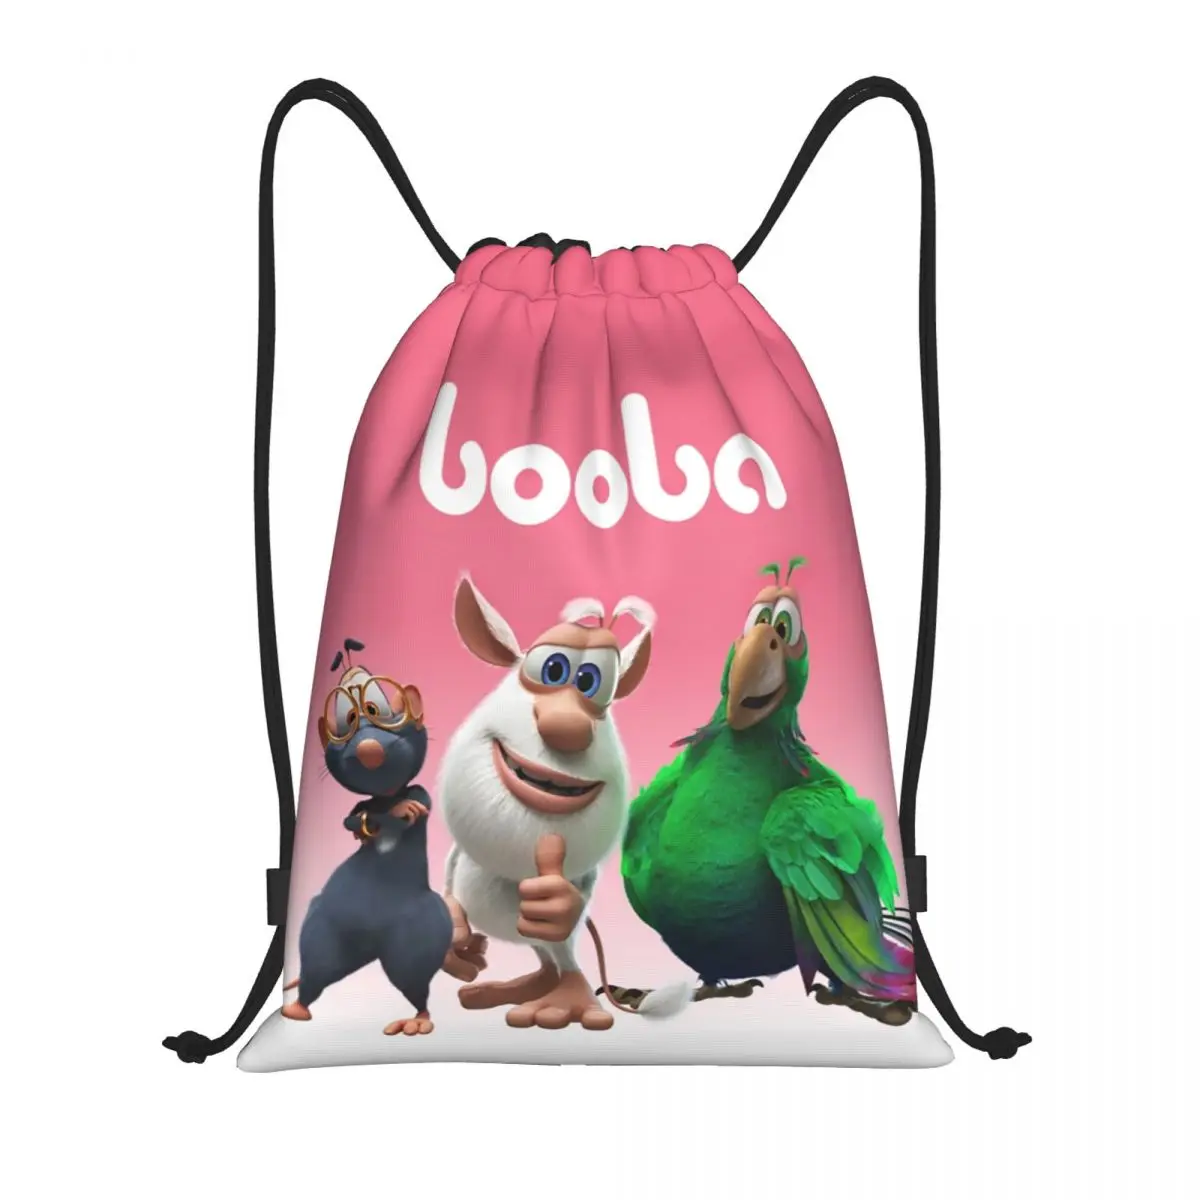 New Animation For Kids Booobas Drawstring Backpack Women Men Gym Sport Sackpack Portable Anime Cartoon Shopping Bag Sack